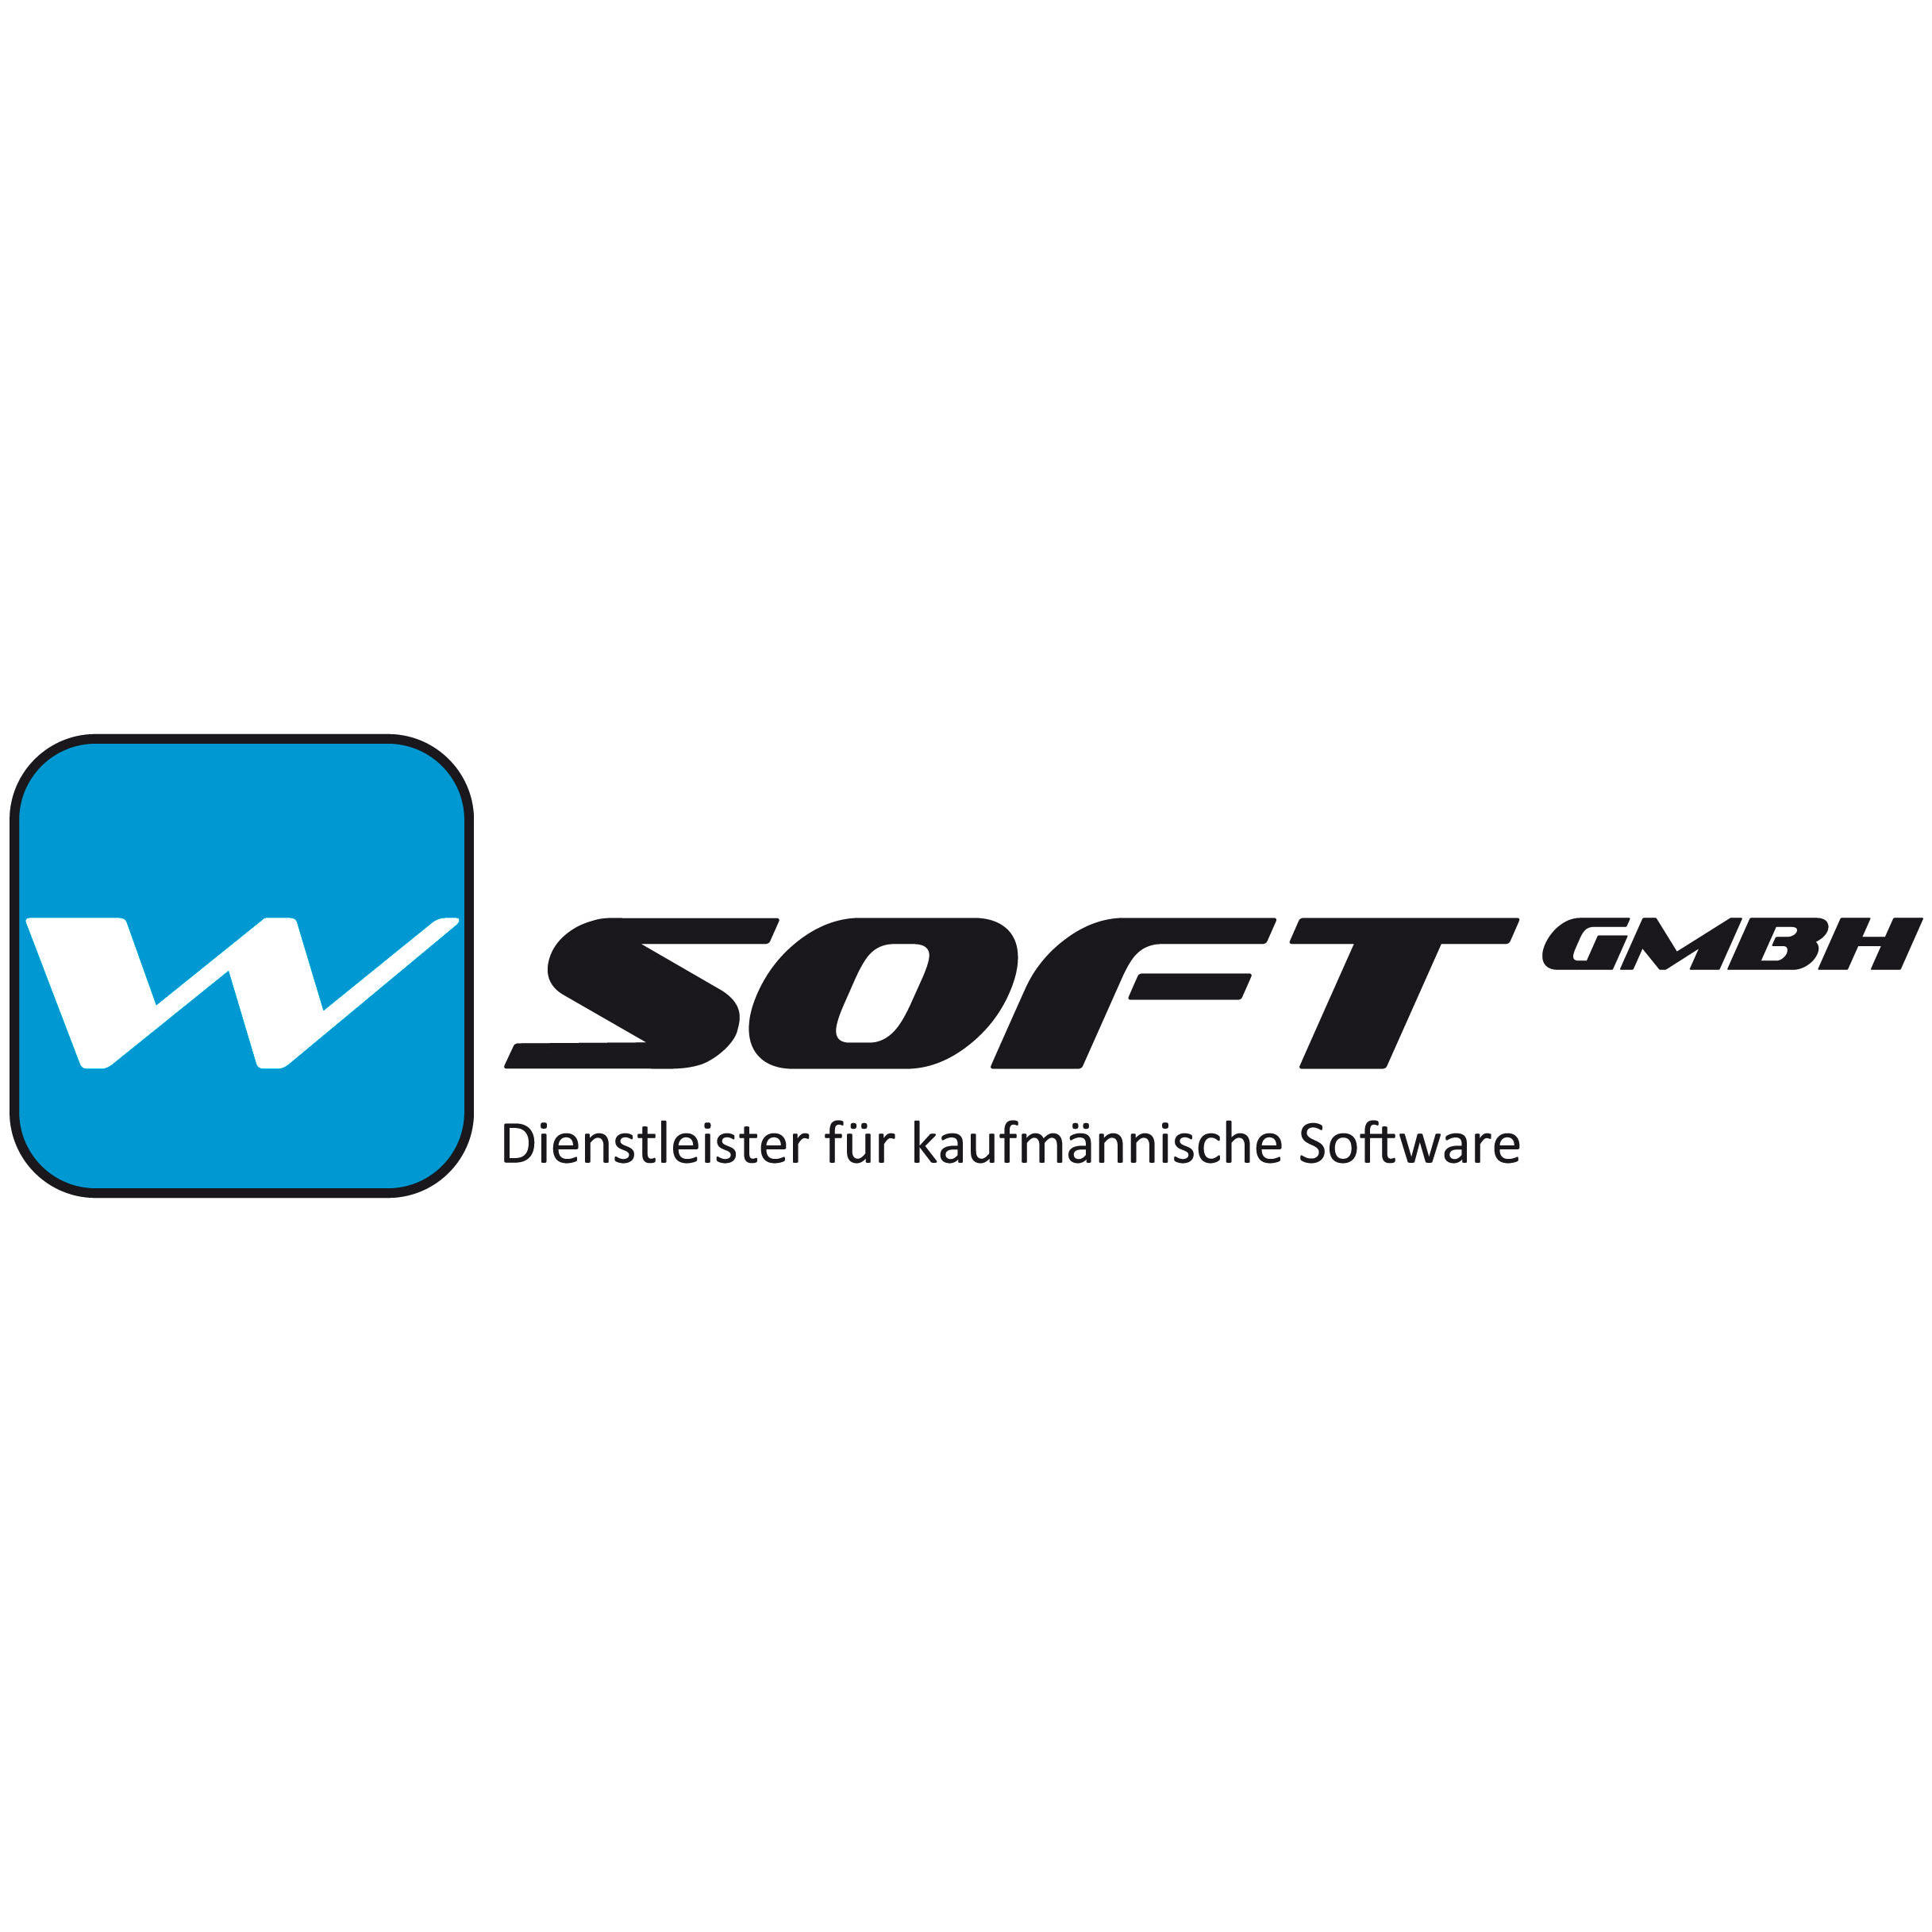 Logo Wsoft GmbH